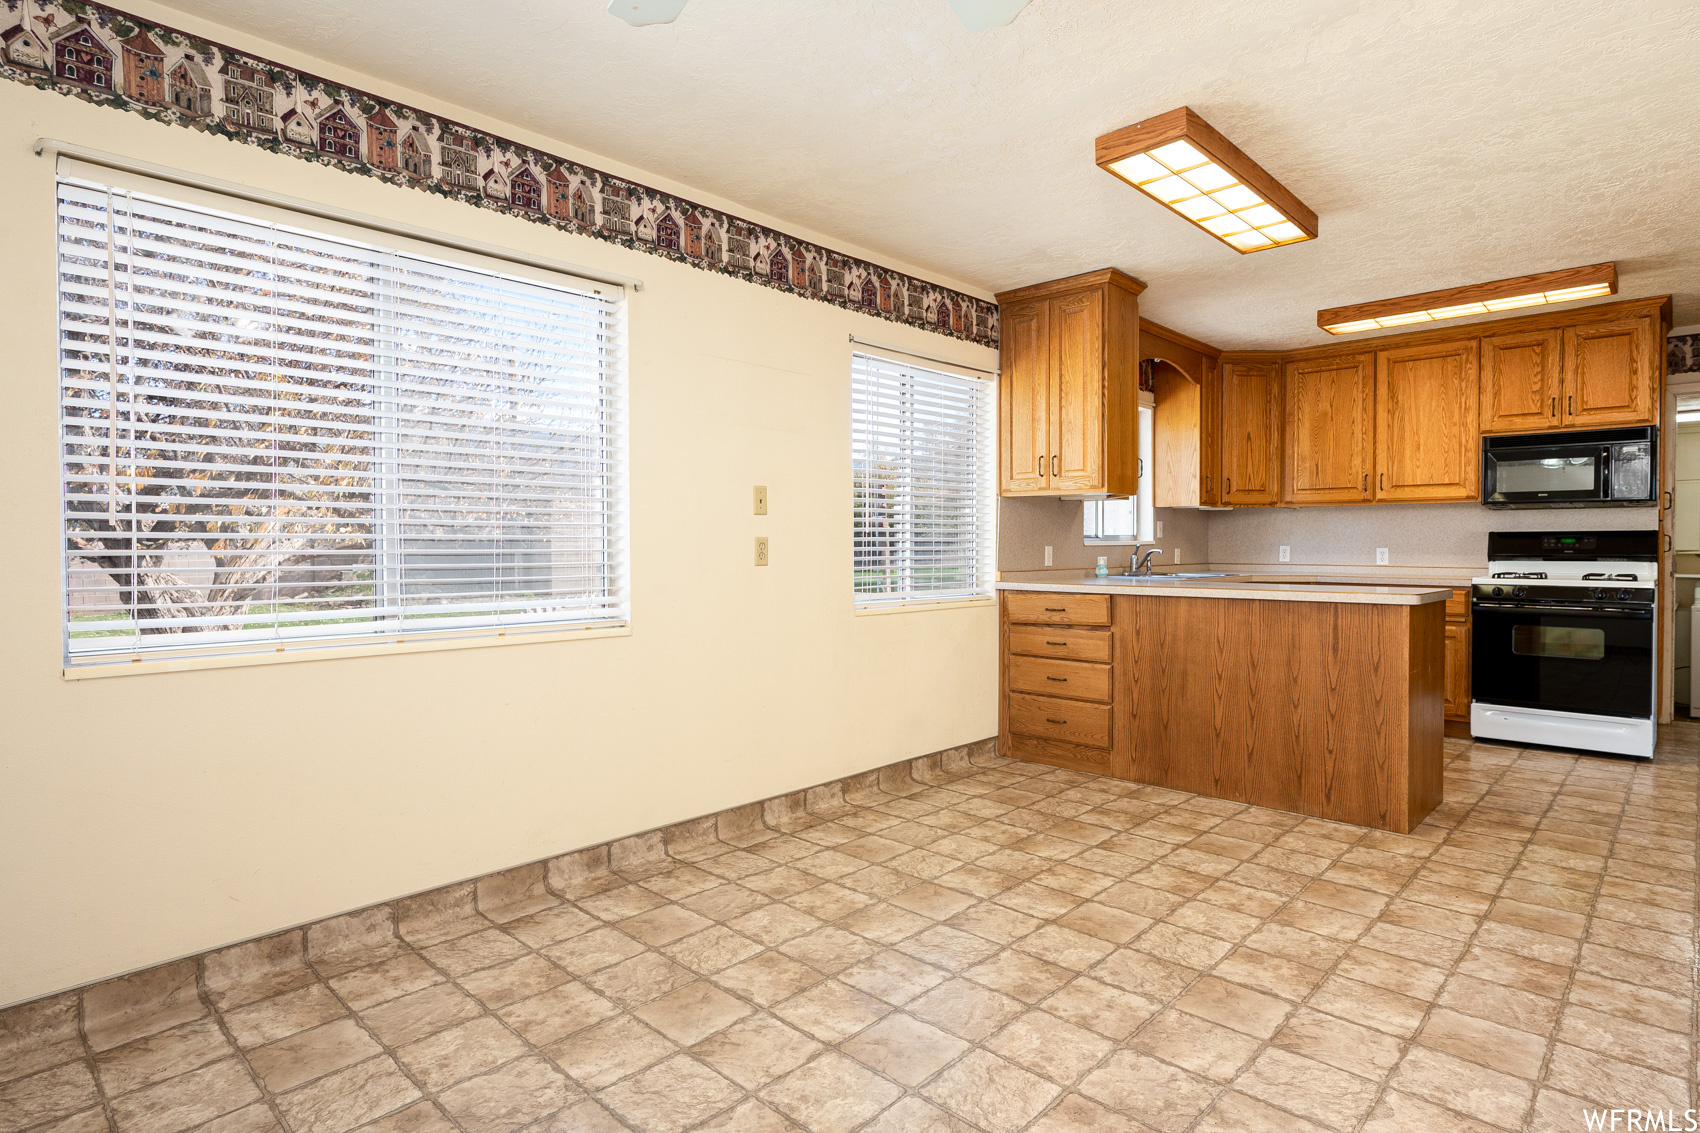 Kitchen with white range, light tile flooring, sink, and kitchen peninsula